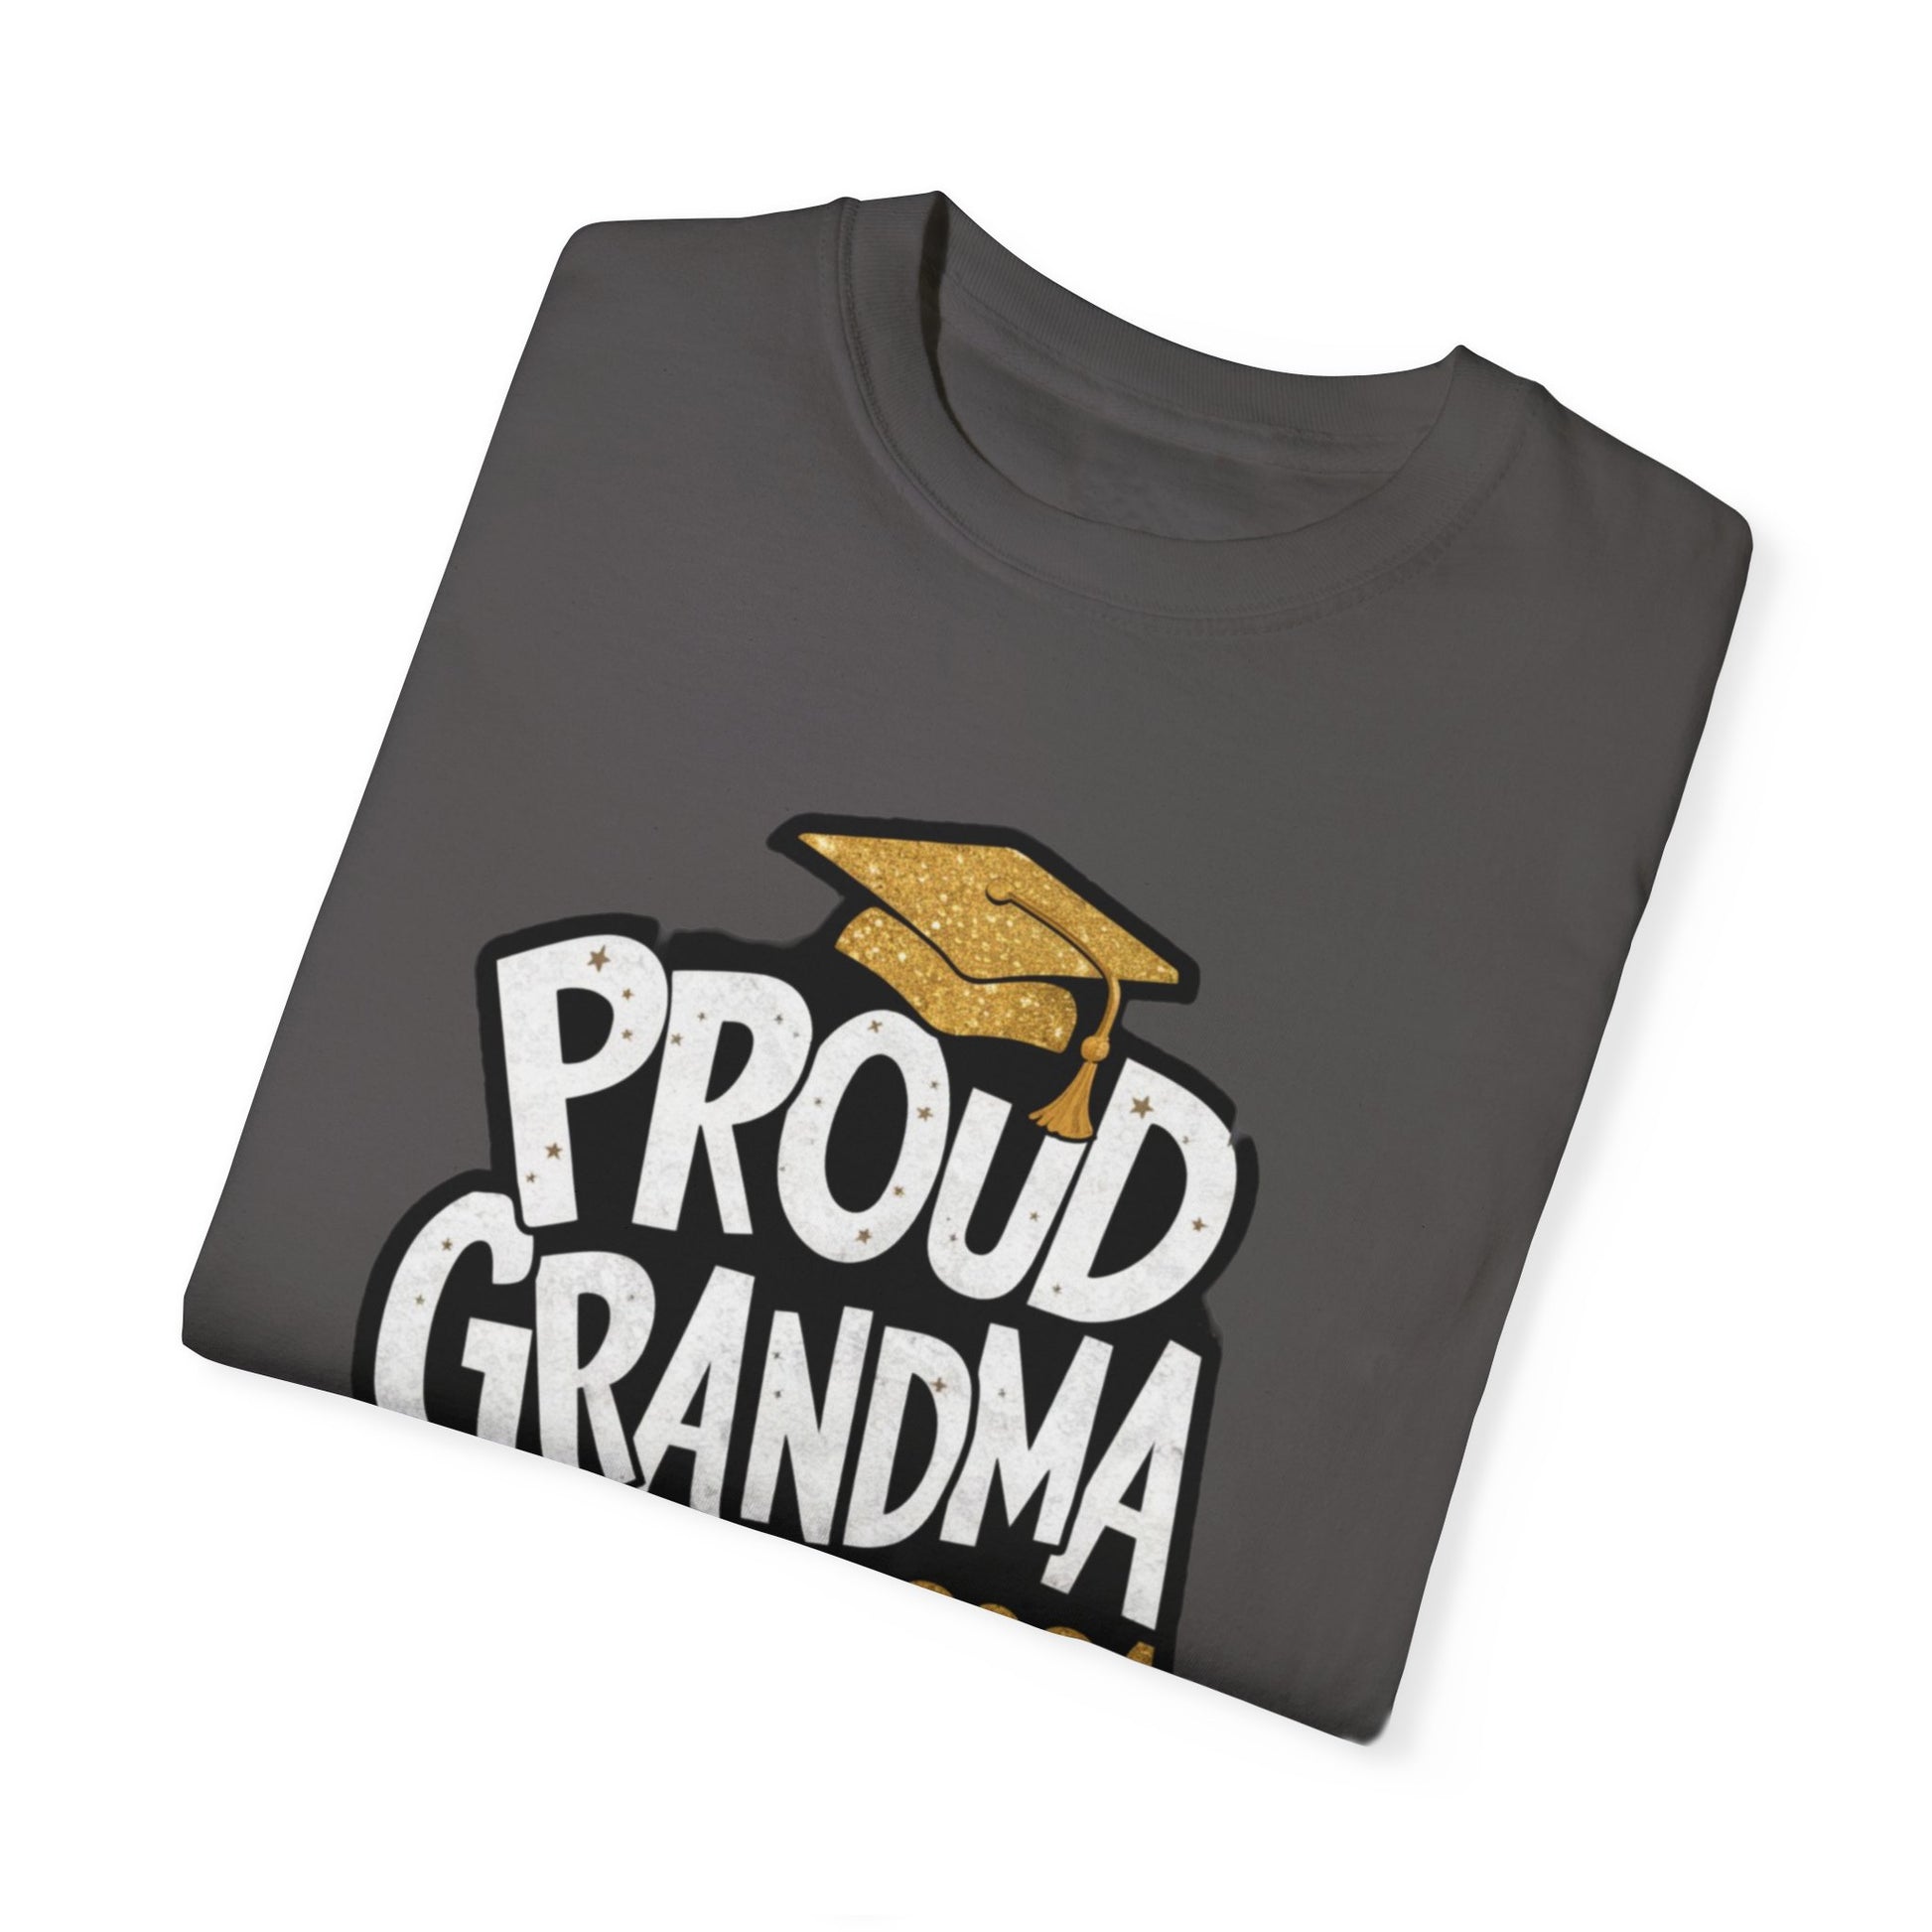 Proud of Grandma 2024 Graduate Unisex Garment-dyed T-shirt Cotton Funny Humorous Graphic Soft Premium Unisex Men Women Graphite T-shirt Birthday Gift-38